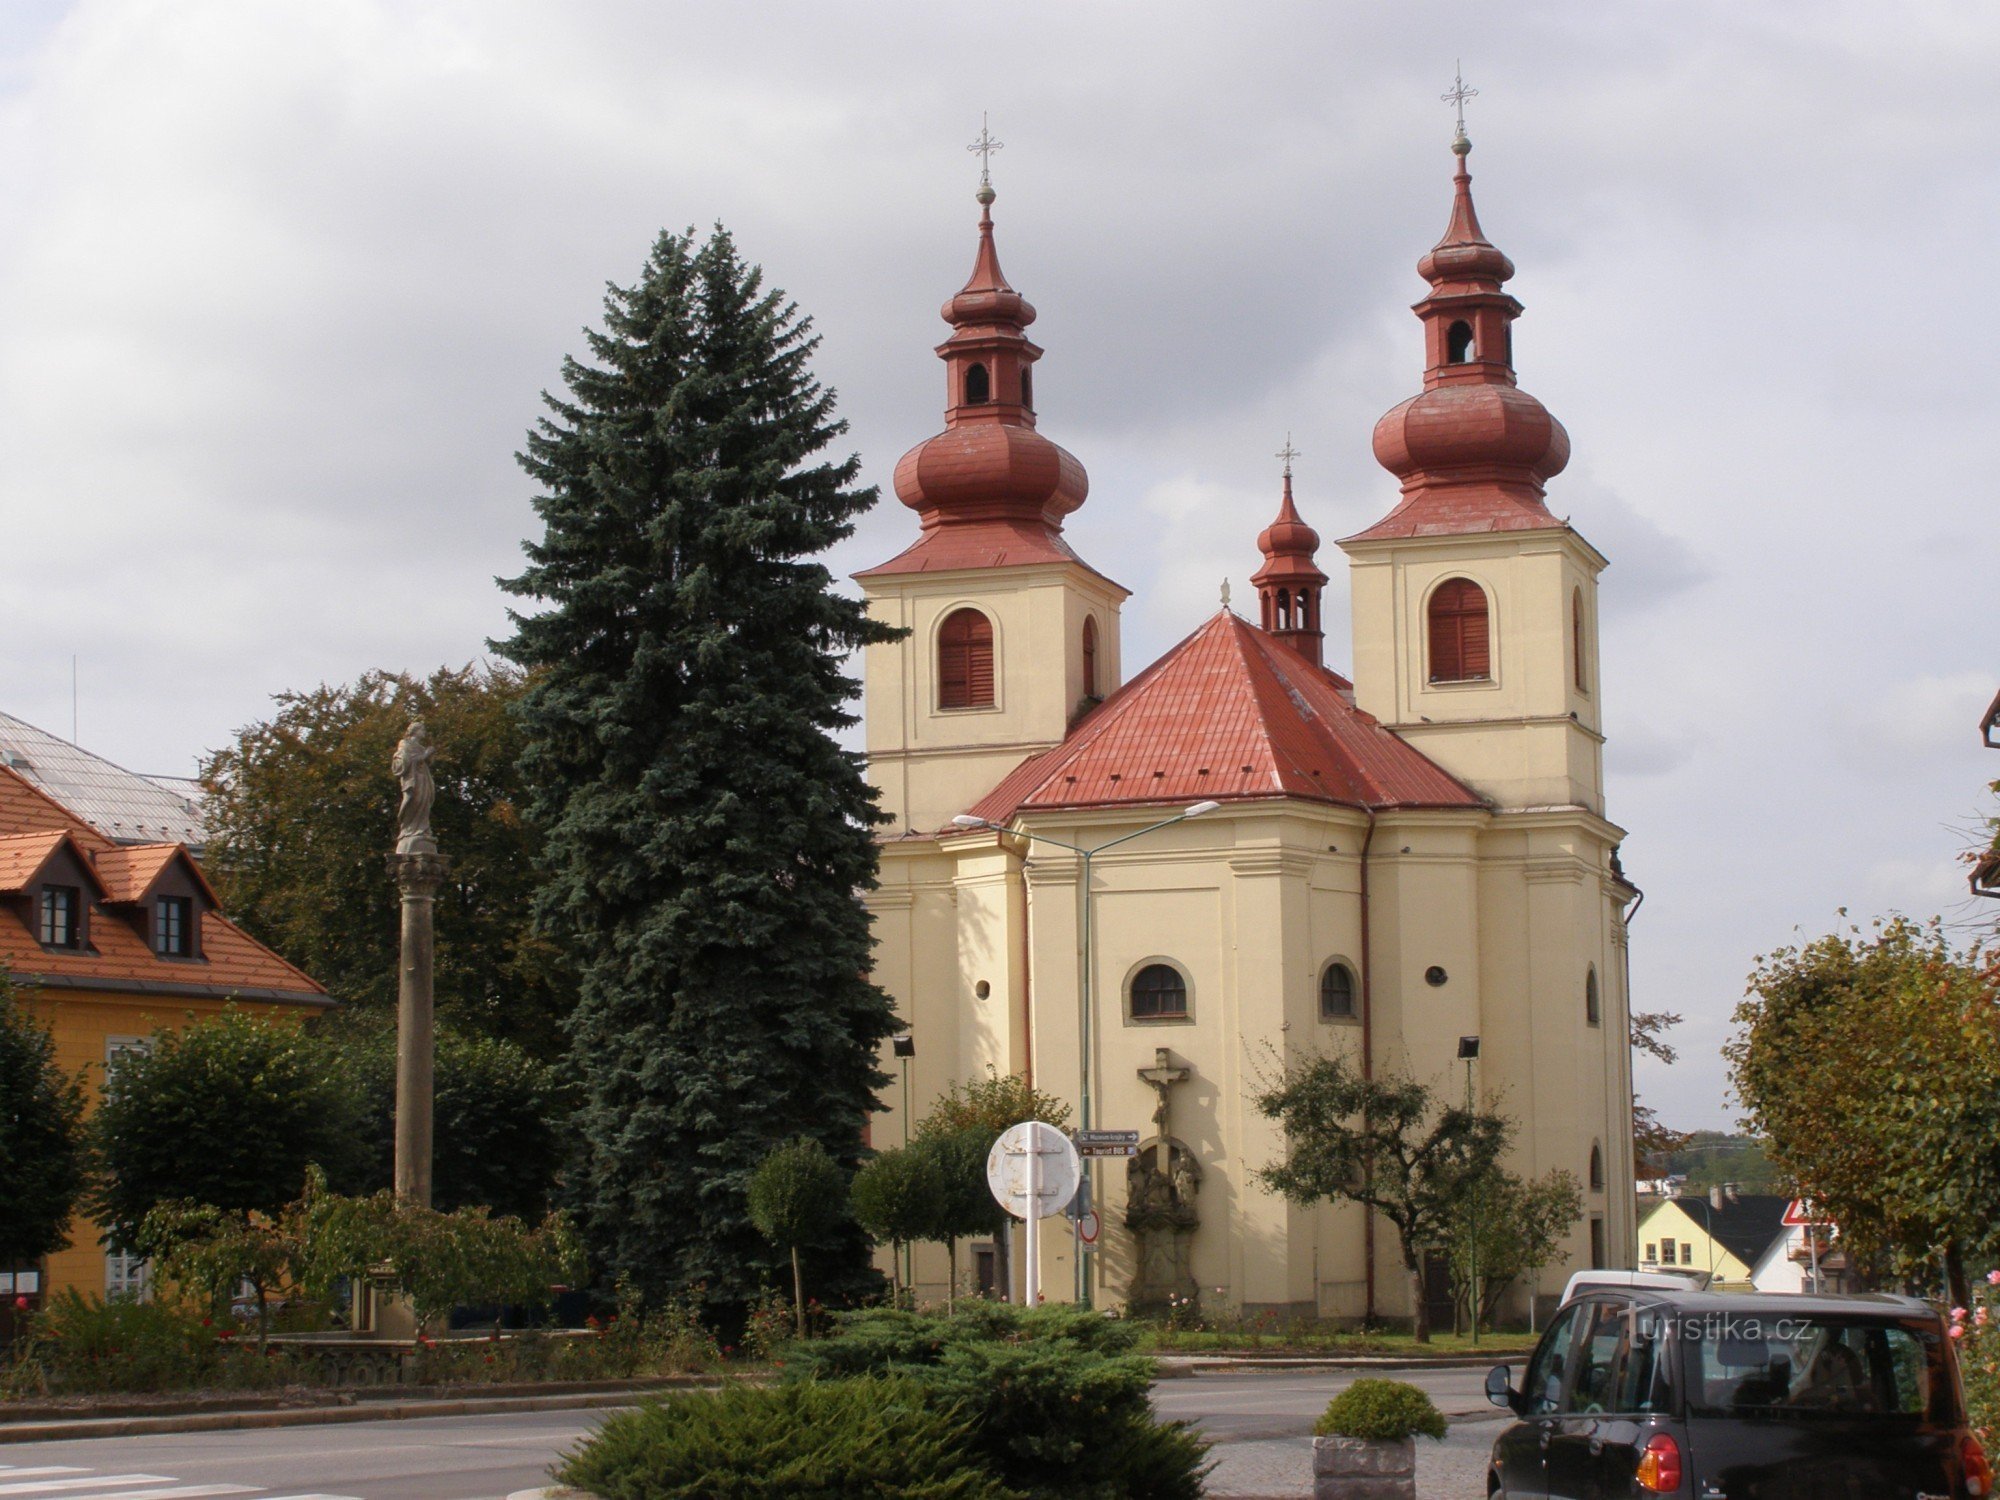 Vamberk - Kirche St. Prokop